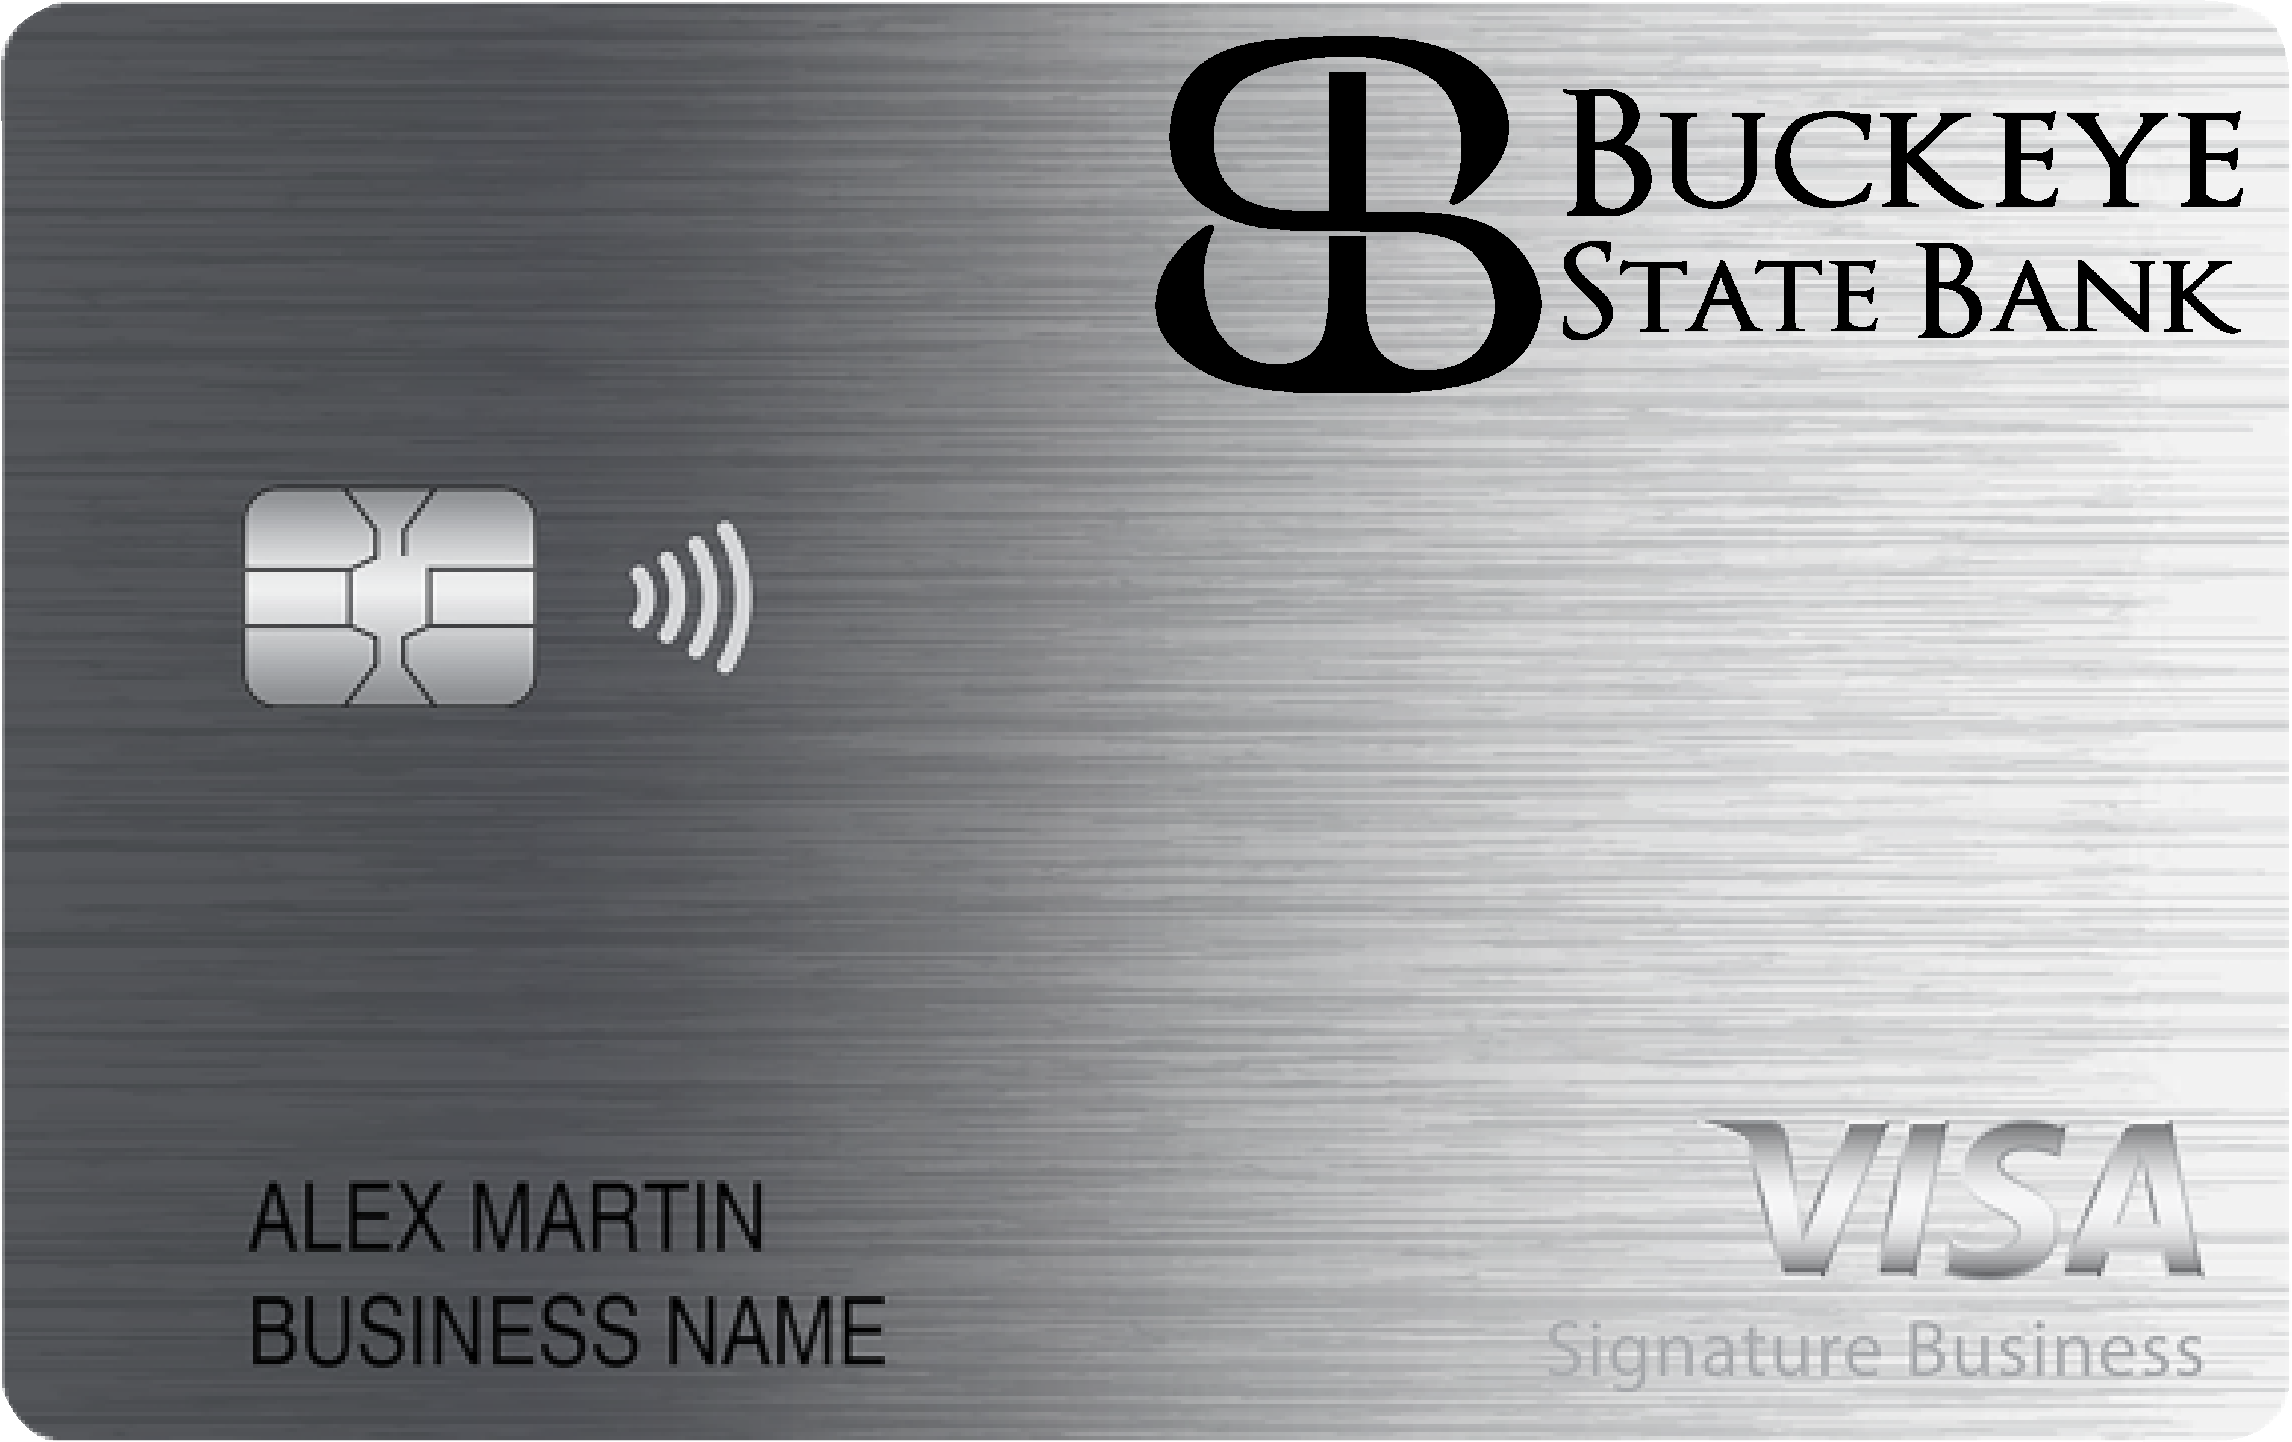 Buckeye State Bank Smart Business Rewards Card